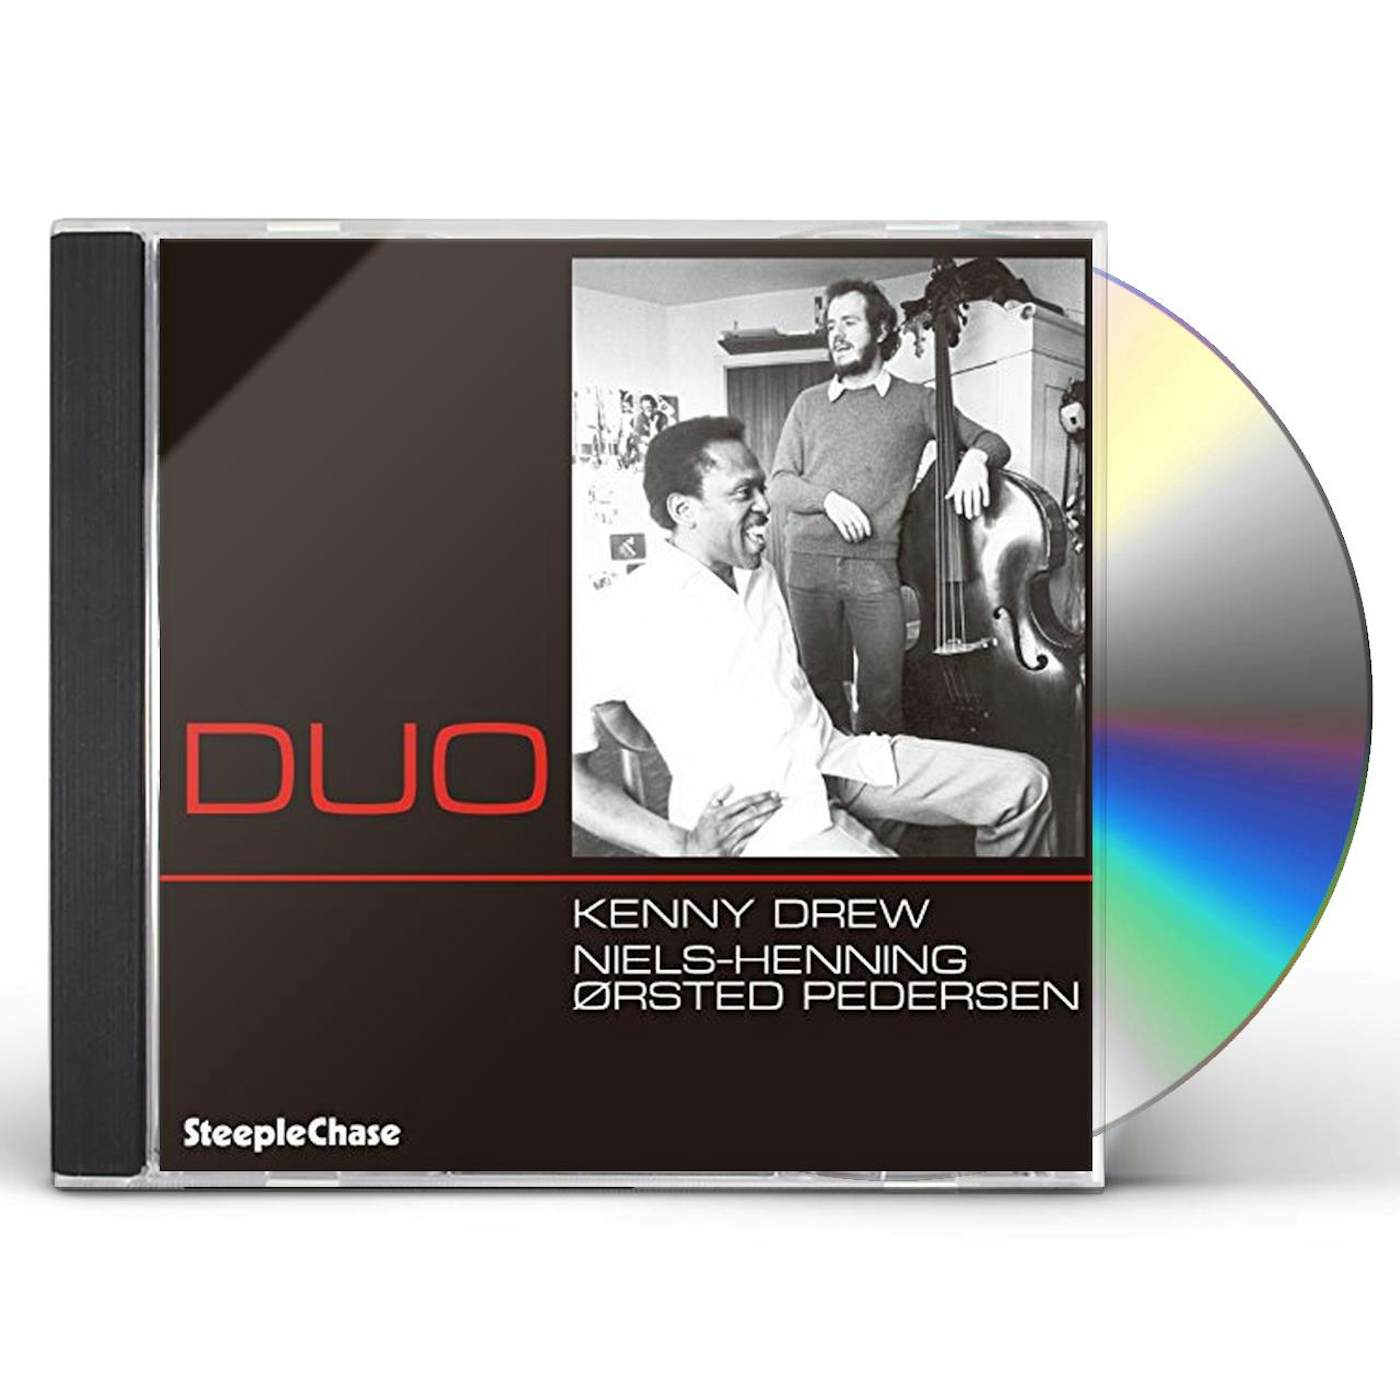 Kenny Drew DUO (& NIELS-HENNING) CD